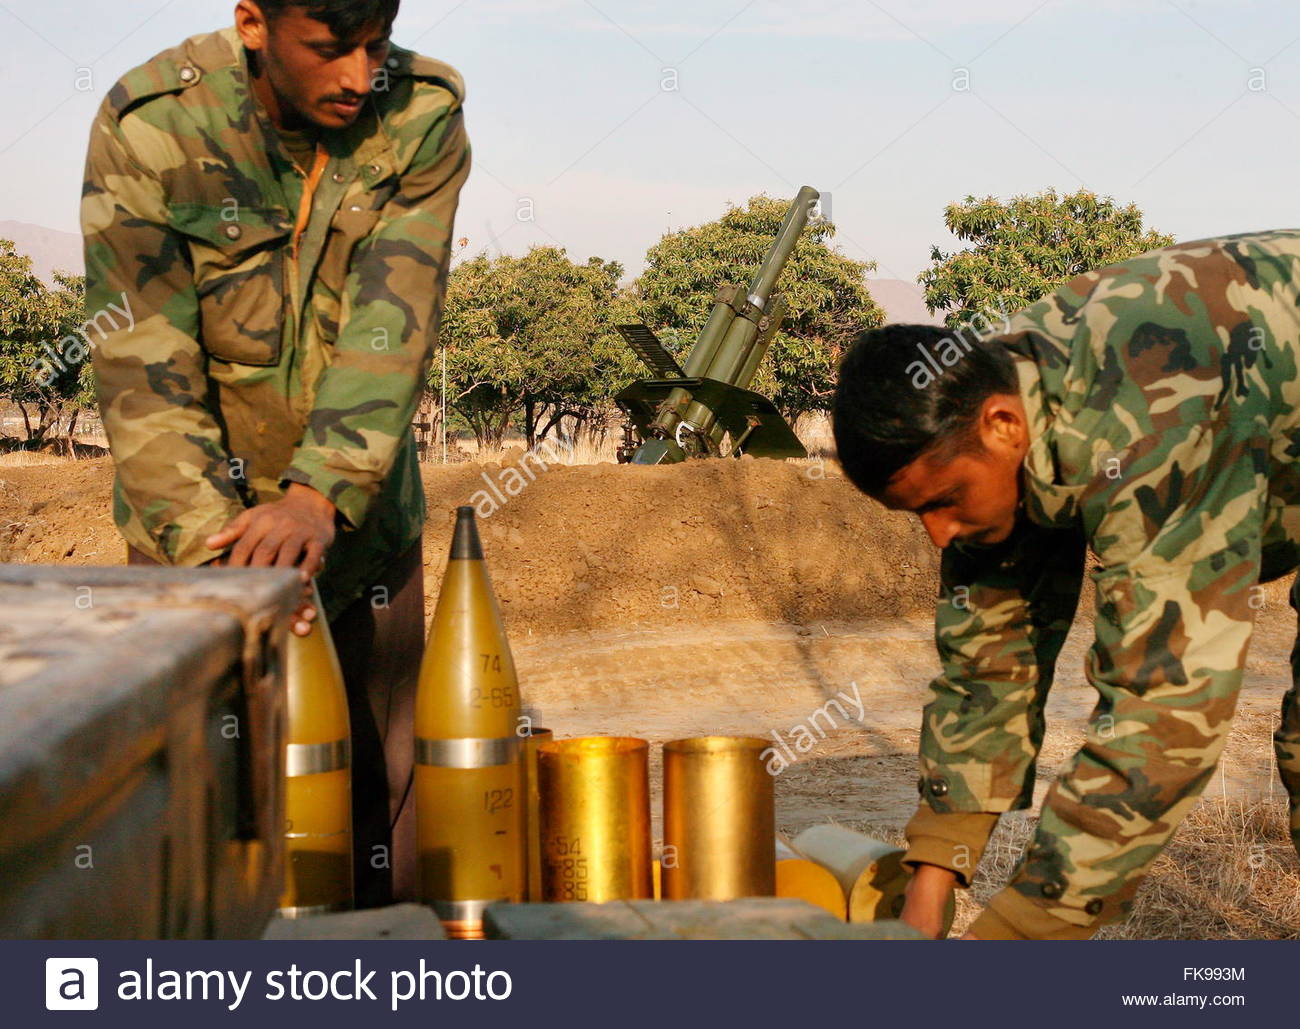 pakistan-army-soldiers-unpack-artillery-ammunition-in-swat-valley-FK993M.jpg